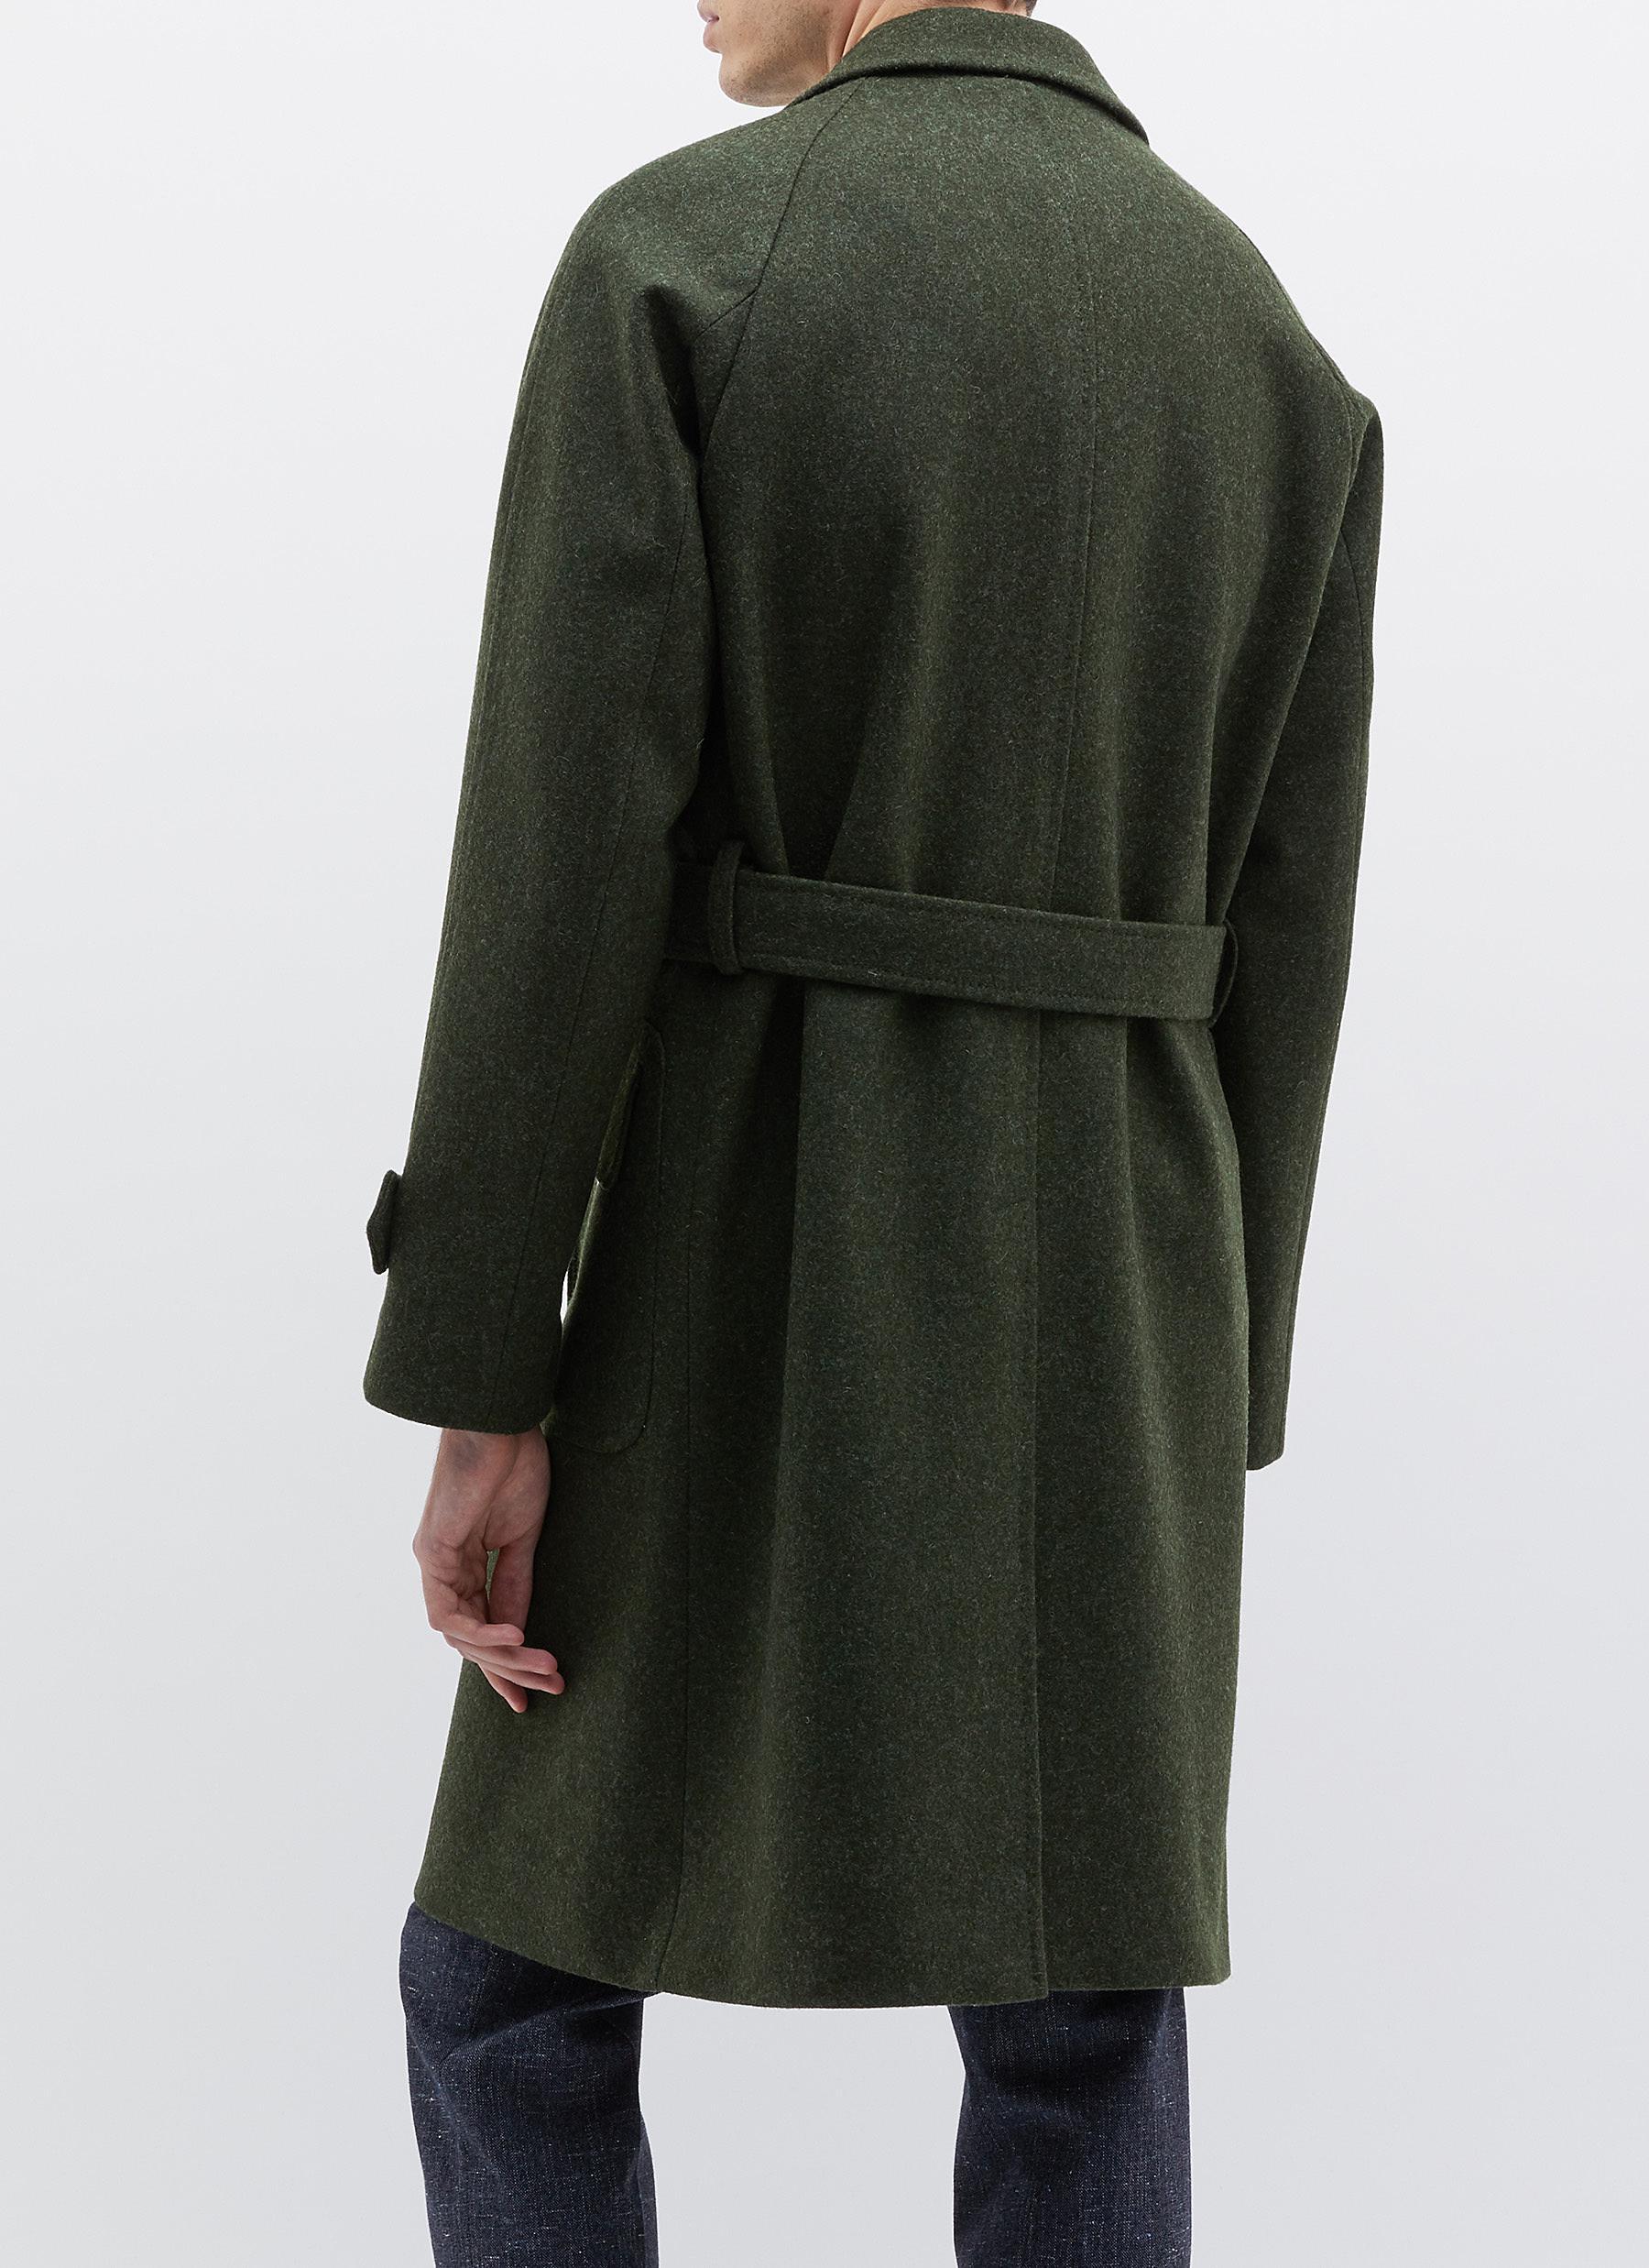 Ring Jacket Wool Belted Melton Raglan Trench Coat in Green for Men - Lyst